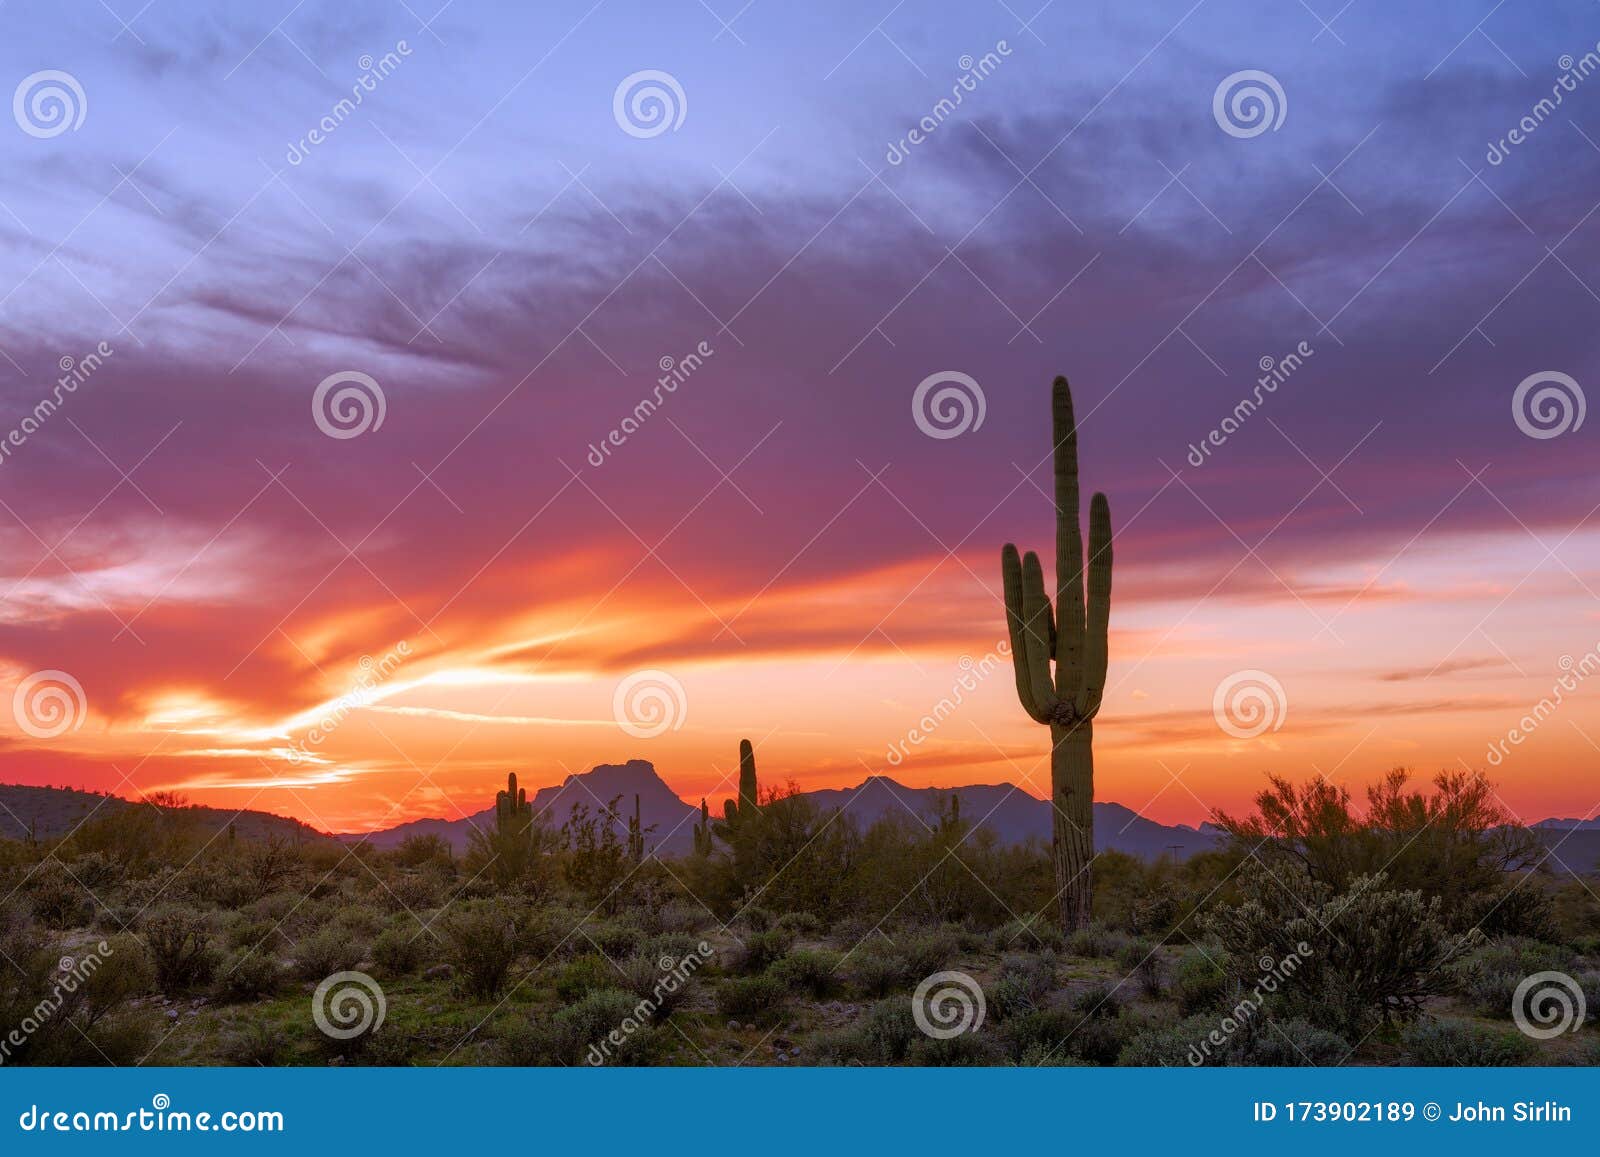 Arizona Desert Landscape at Sunset with Saguaro Cactus Stock Image ...